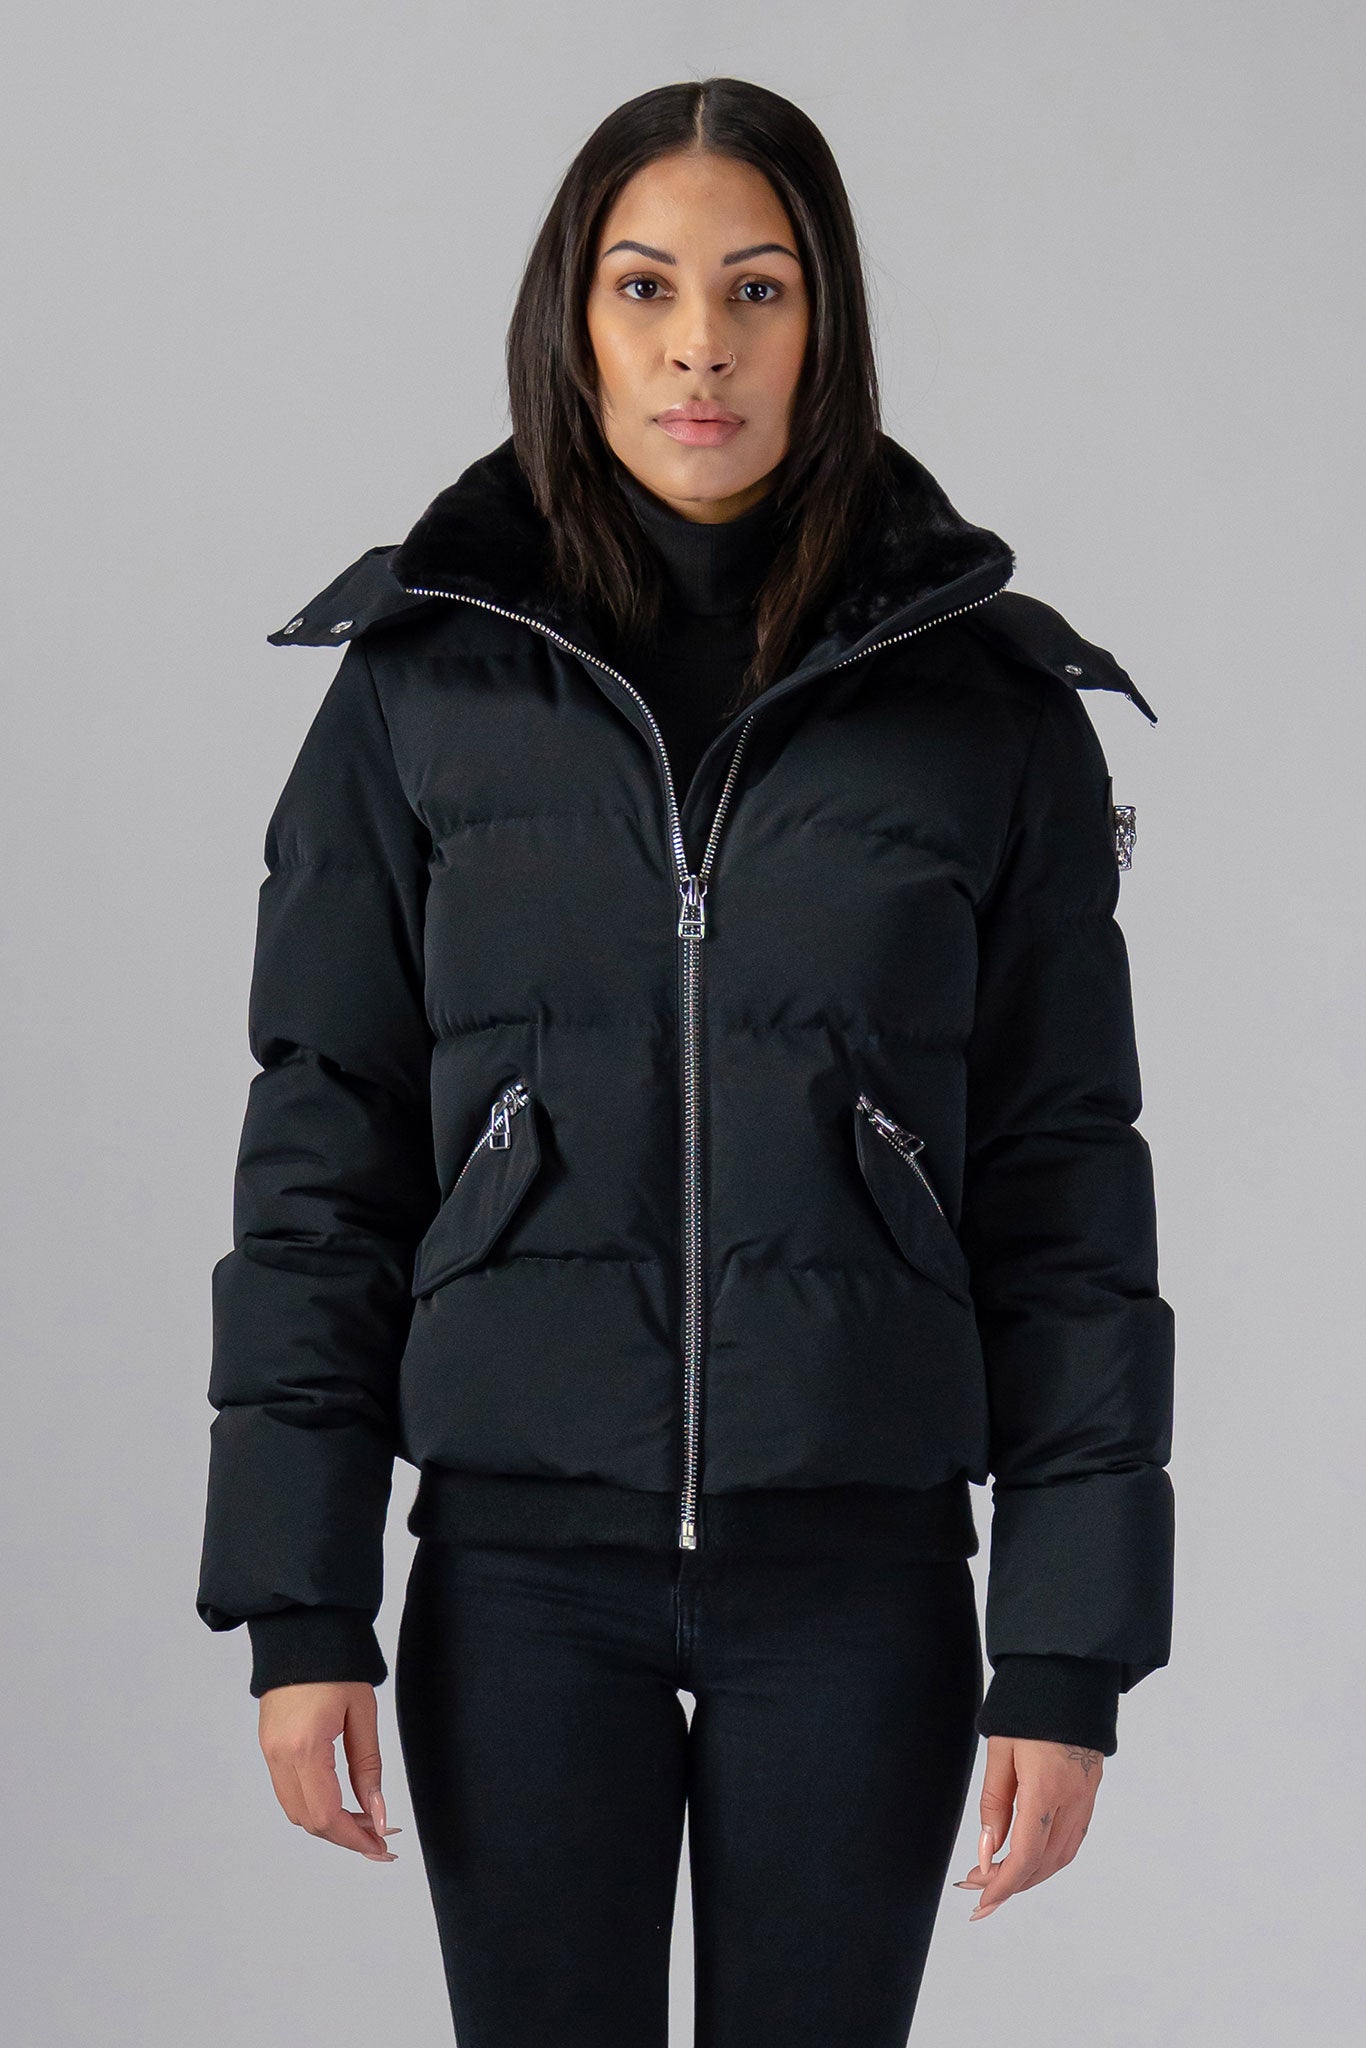 Woodpecker Women's Woody Bomber Winter coat. High-end Canadian designer winter coat for women in shiny “Matte Black